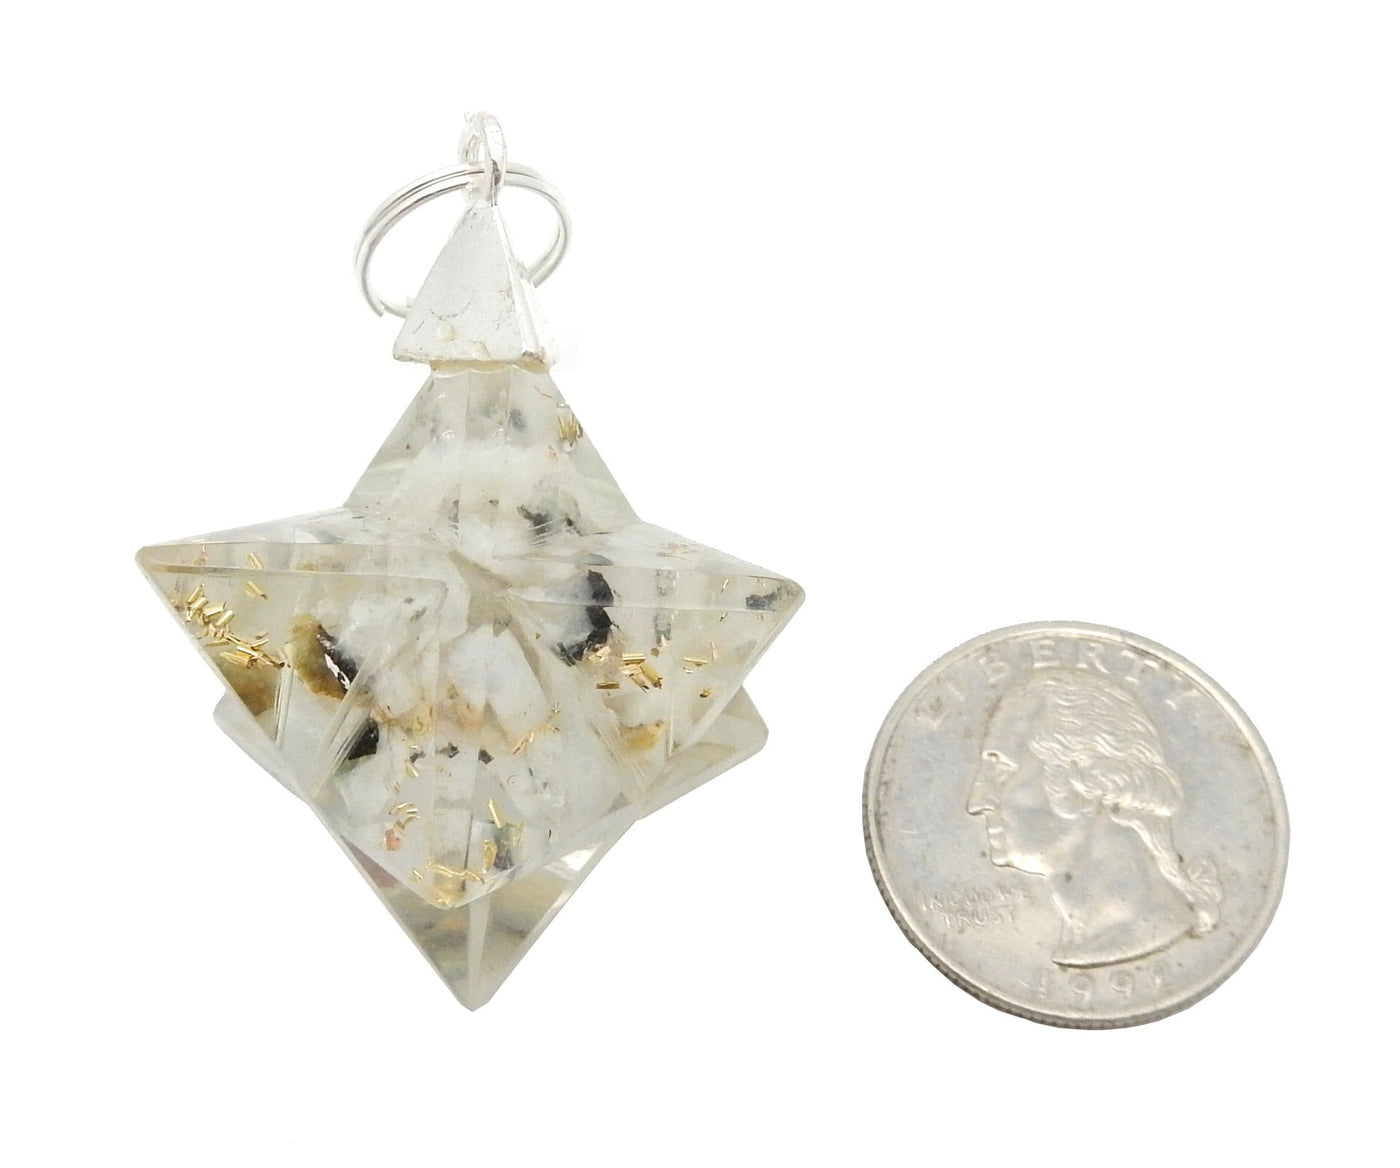 Merkaba - Merkaba Star Orgone Silver Toned Bail Pendant - white one close up next to a quarter